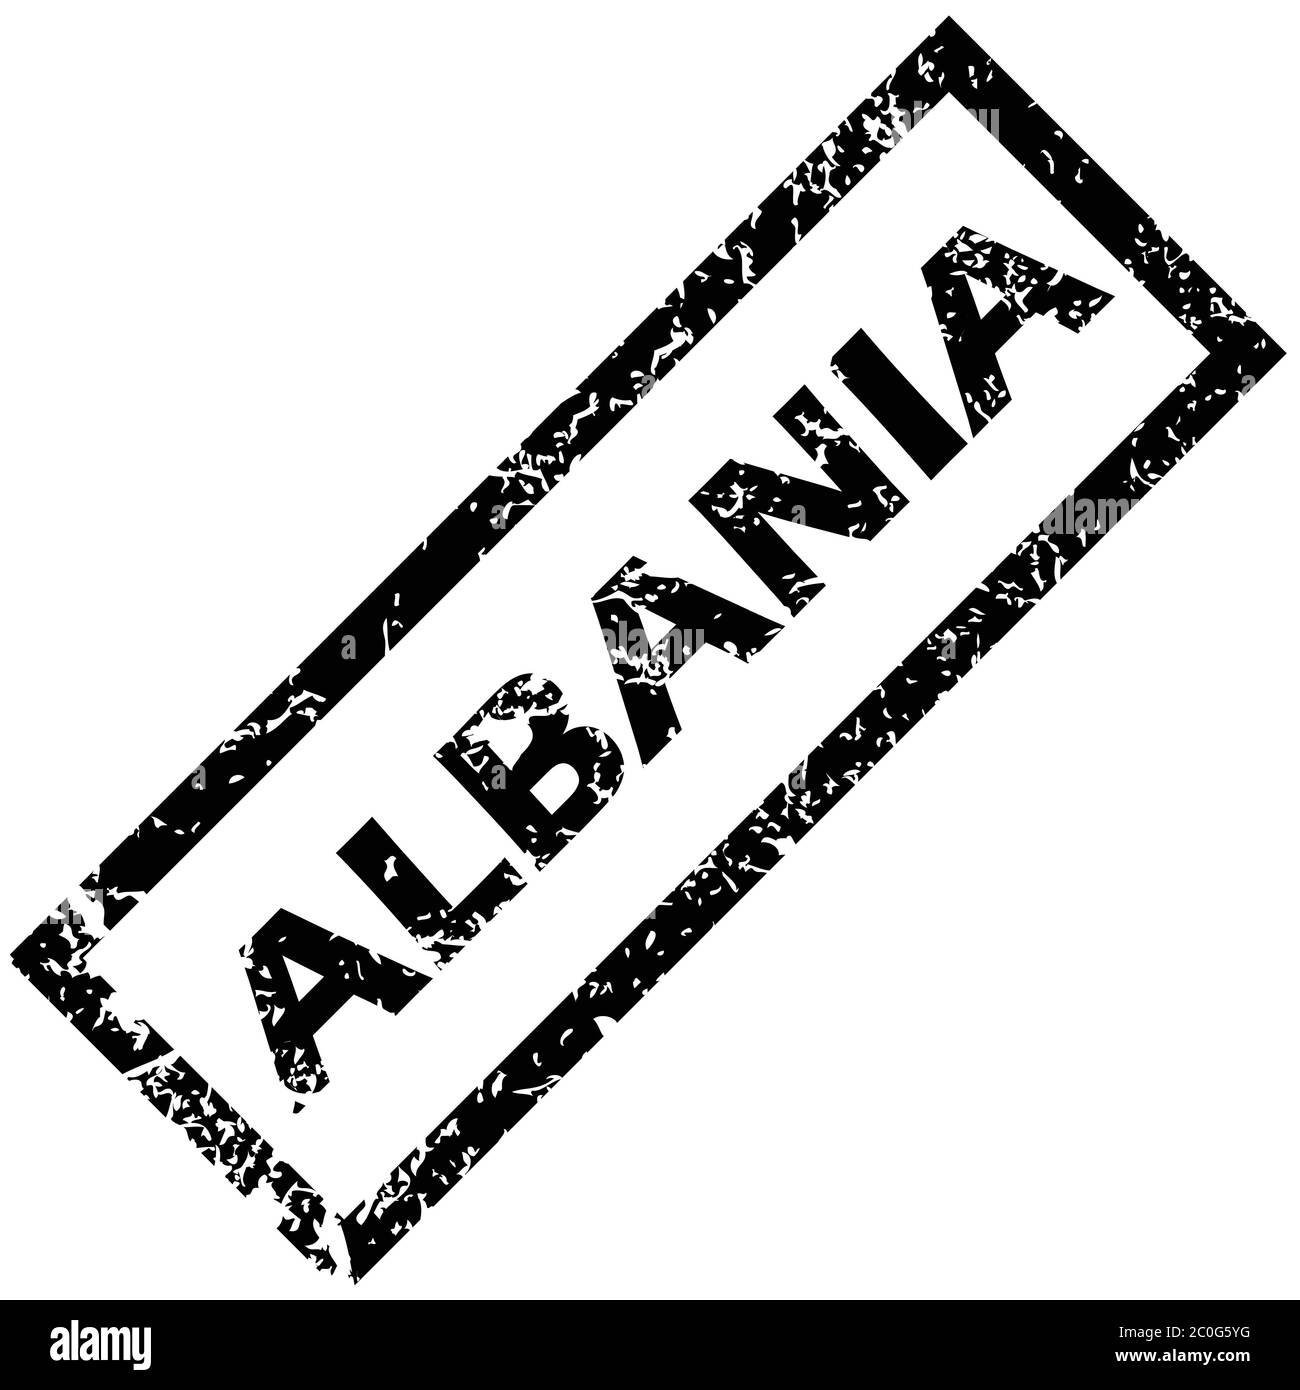 Albania Black and White Stock Photos & Images - Alamy